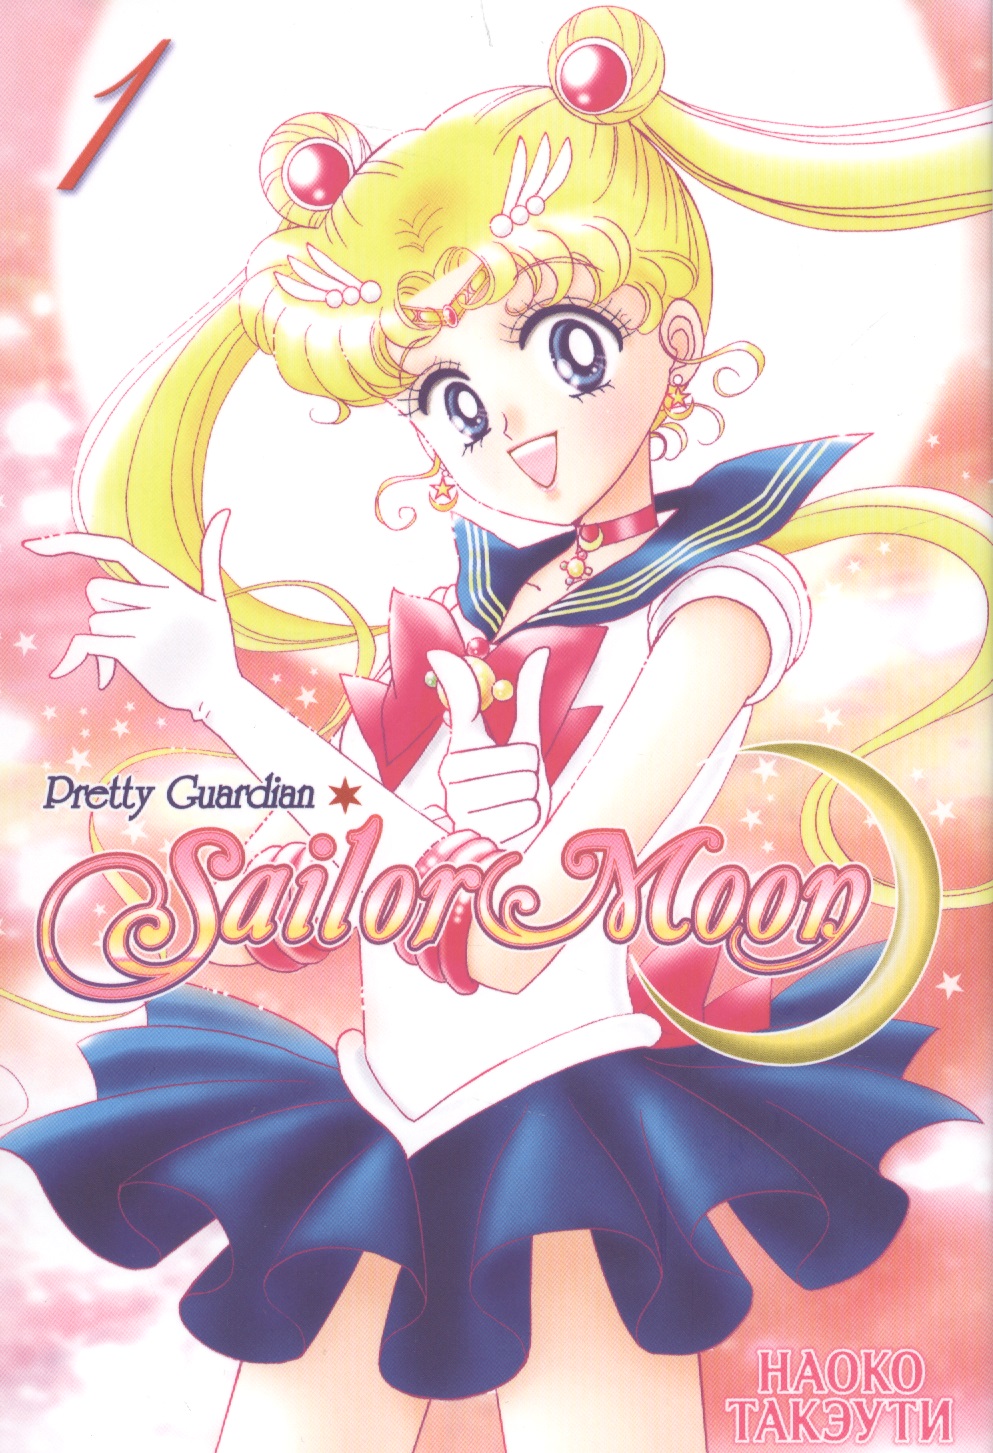 Такэути Наоко Sailor Moon. Том 1. такэути наоко sailor moon том 1